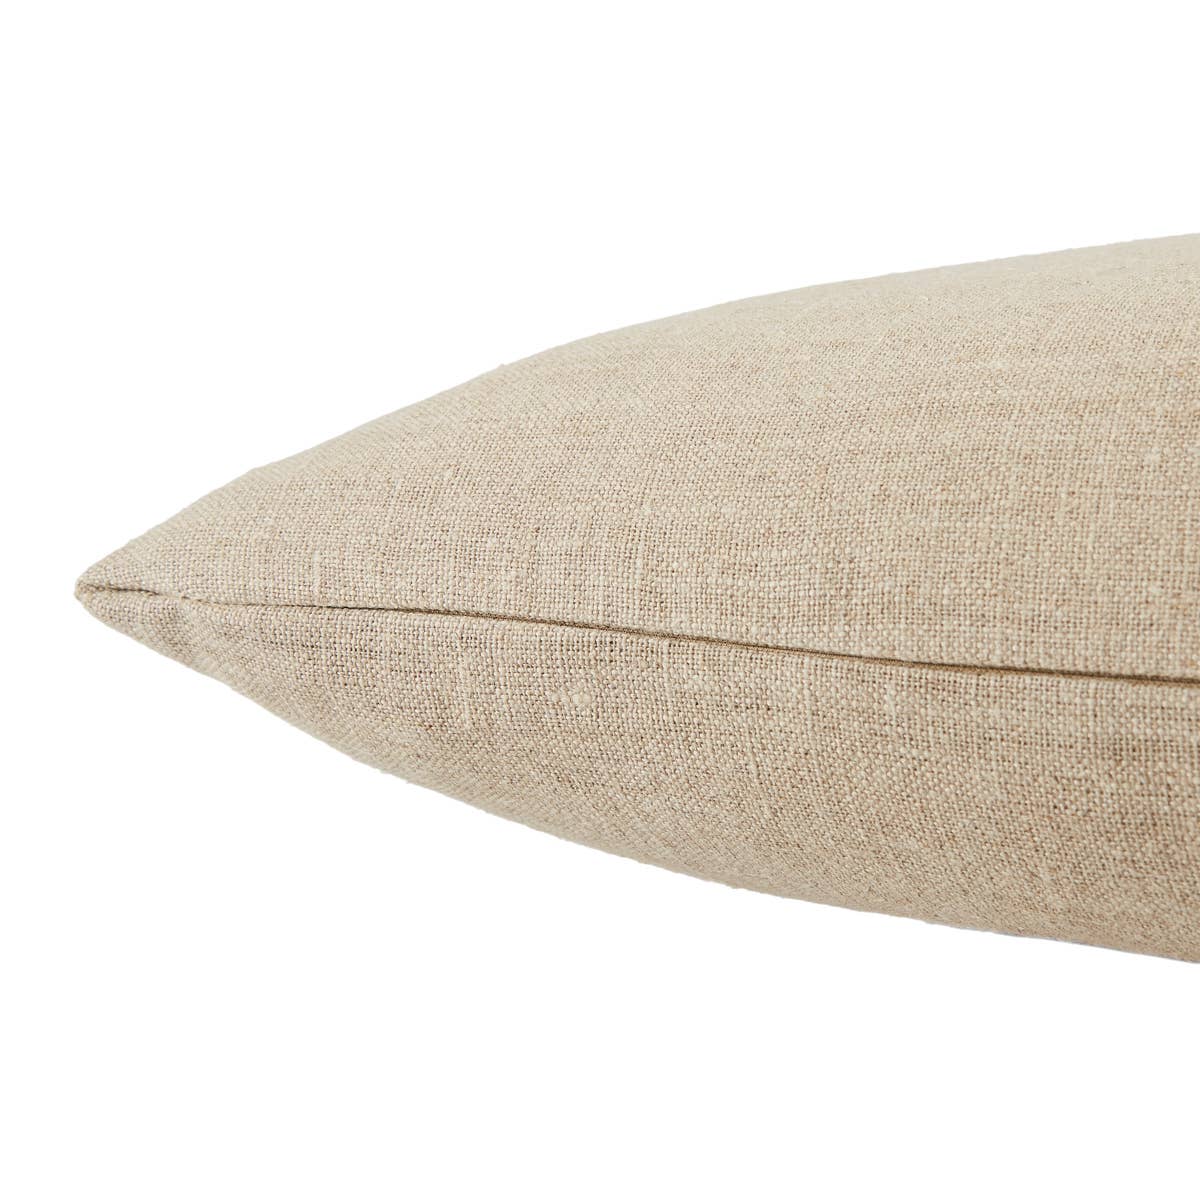 Taiga Ortiz 22 x 22 Indoor Pillow by Jaipur Living | Luxury Pillows | Willow & Albert Home